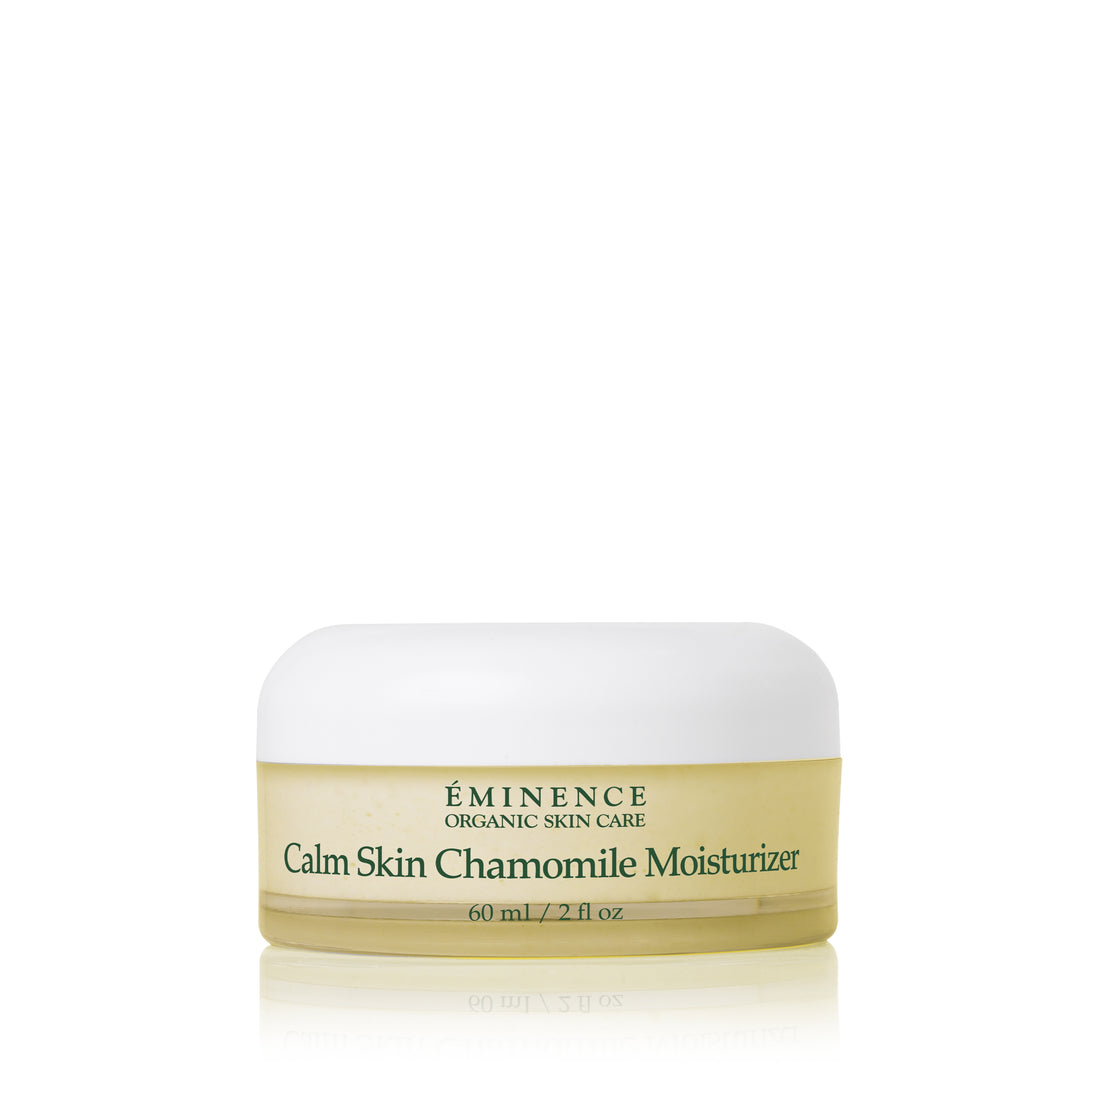 Calm Skin Chamomile Moisturizer | For sensitive prone skin